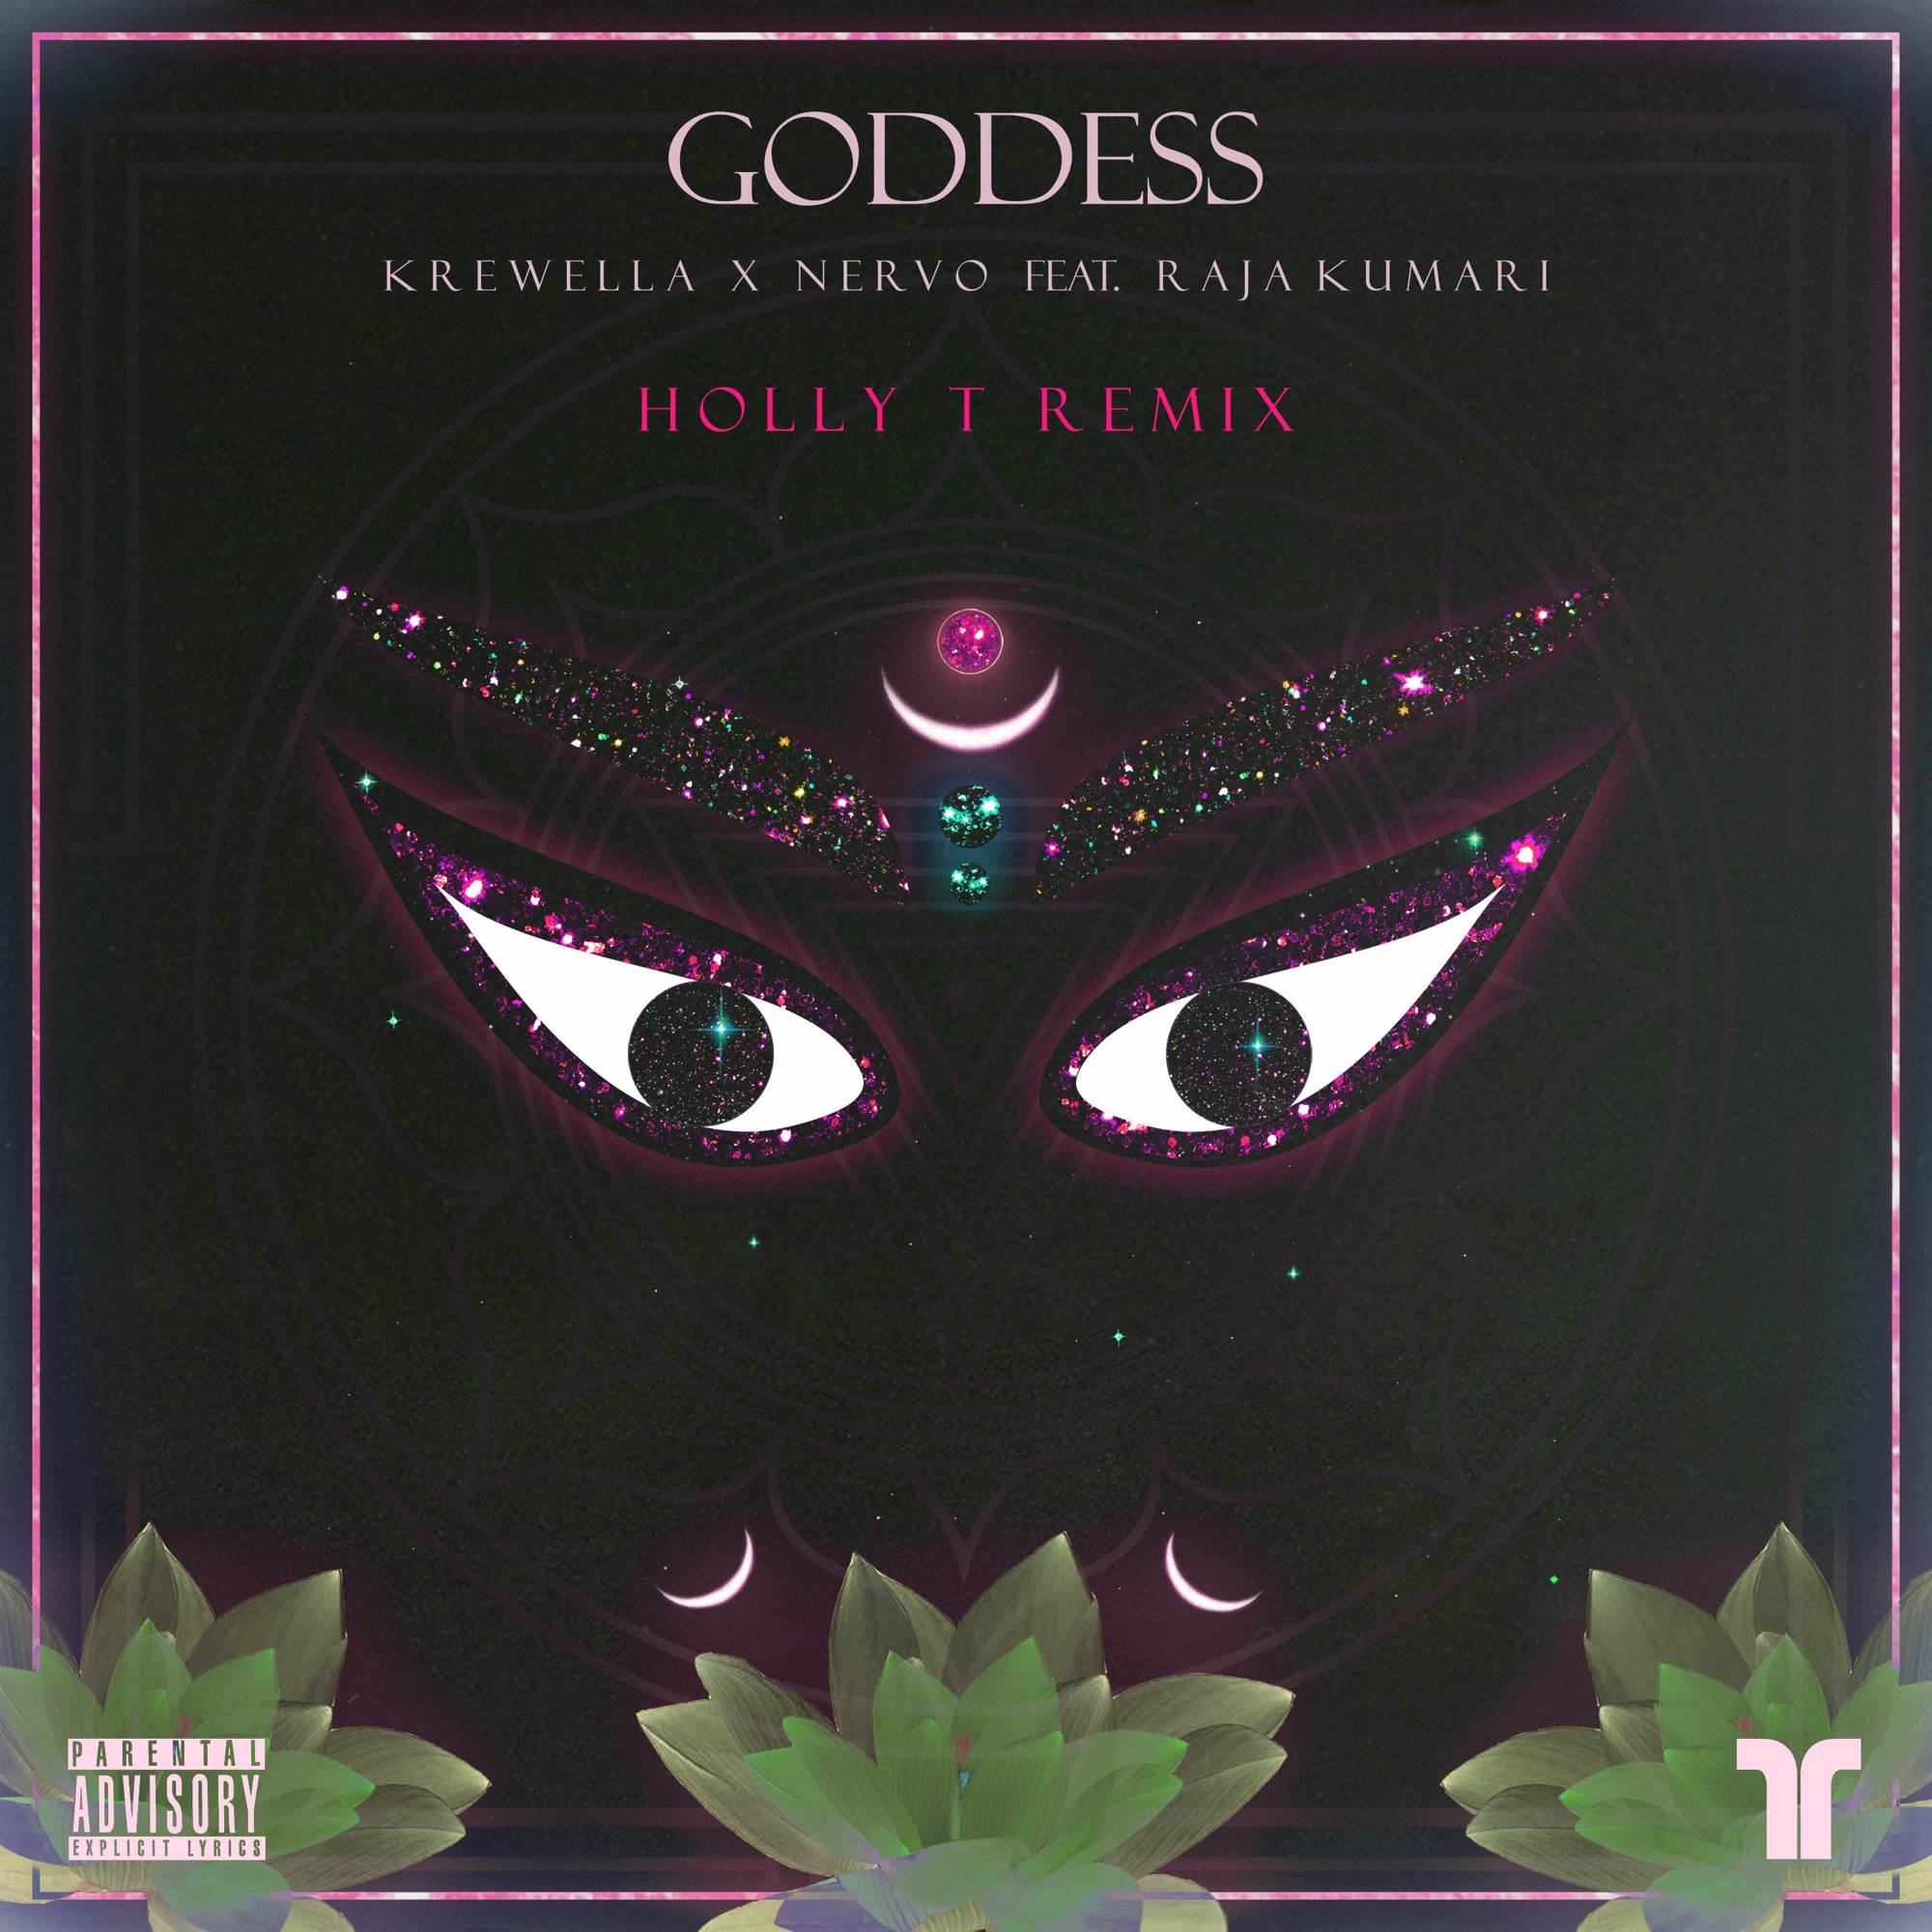 Krewella & NERVO - Goddess (feat. Raja Kumari) [Holly T Remix] - Single